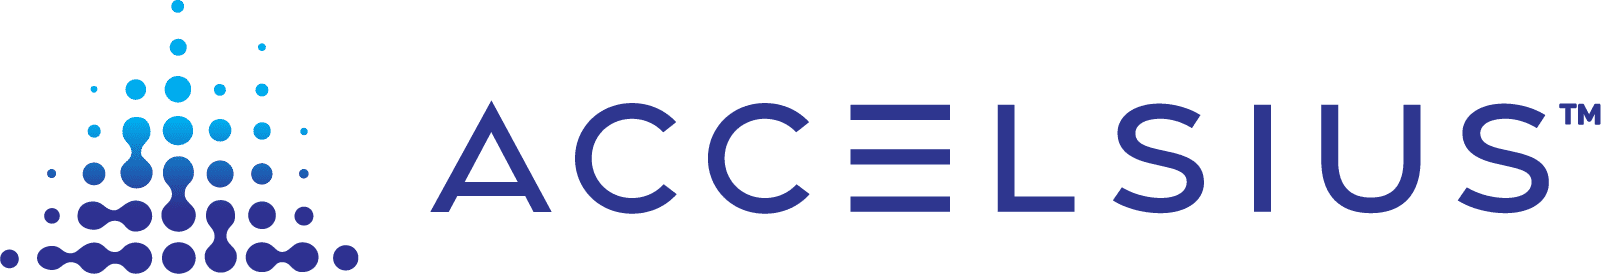 Accelsius horizontal logo